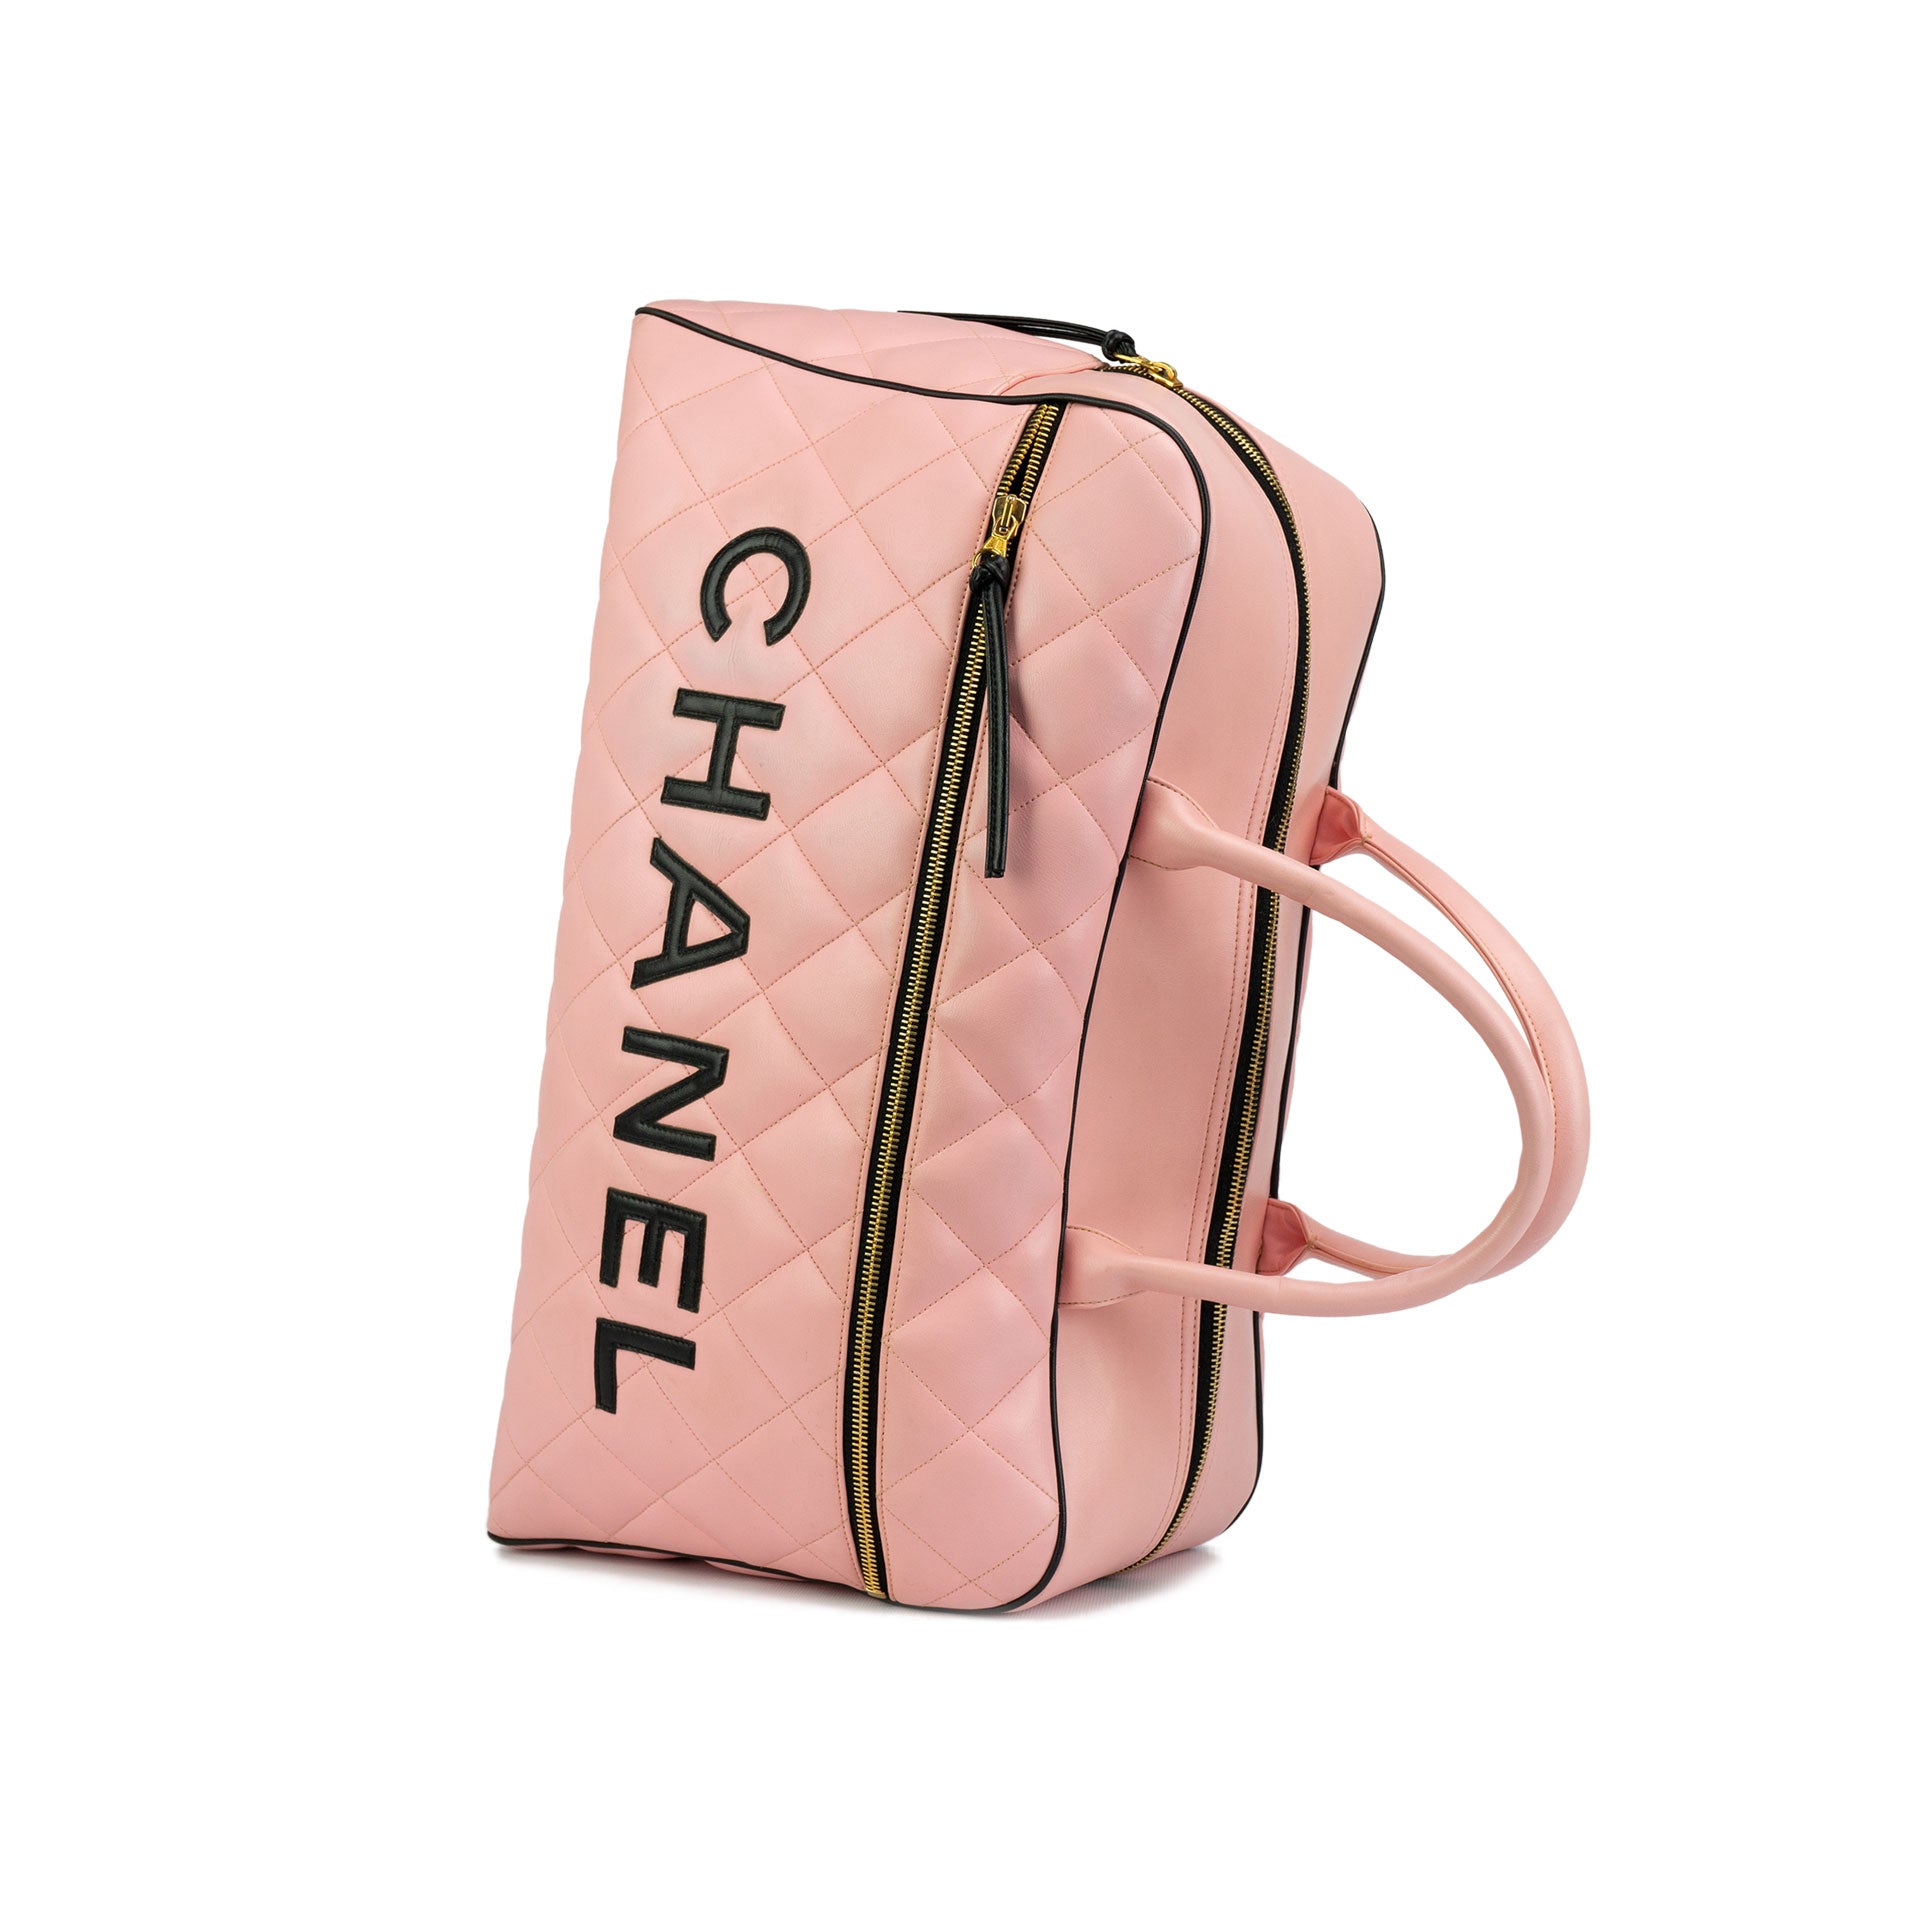 Buy BabyMoon Kids Jelly Sling Purse Fashion Handbag (10x13x5 CM